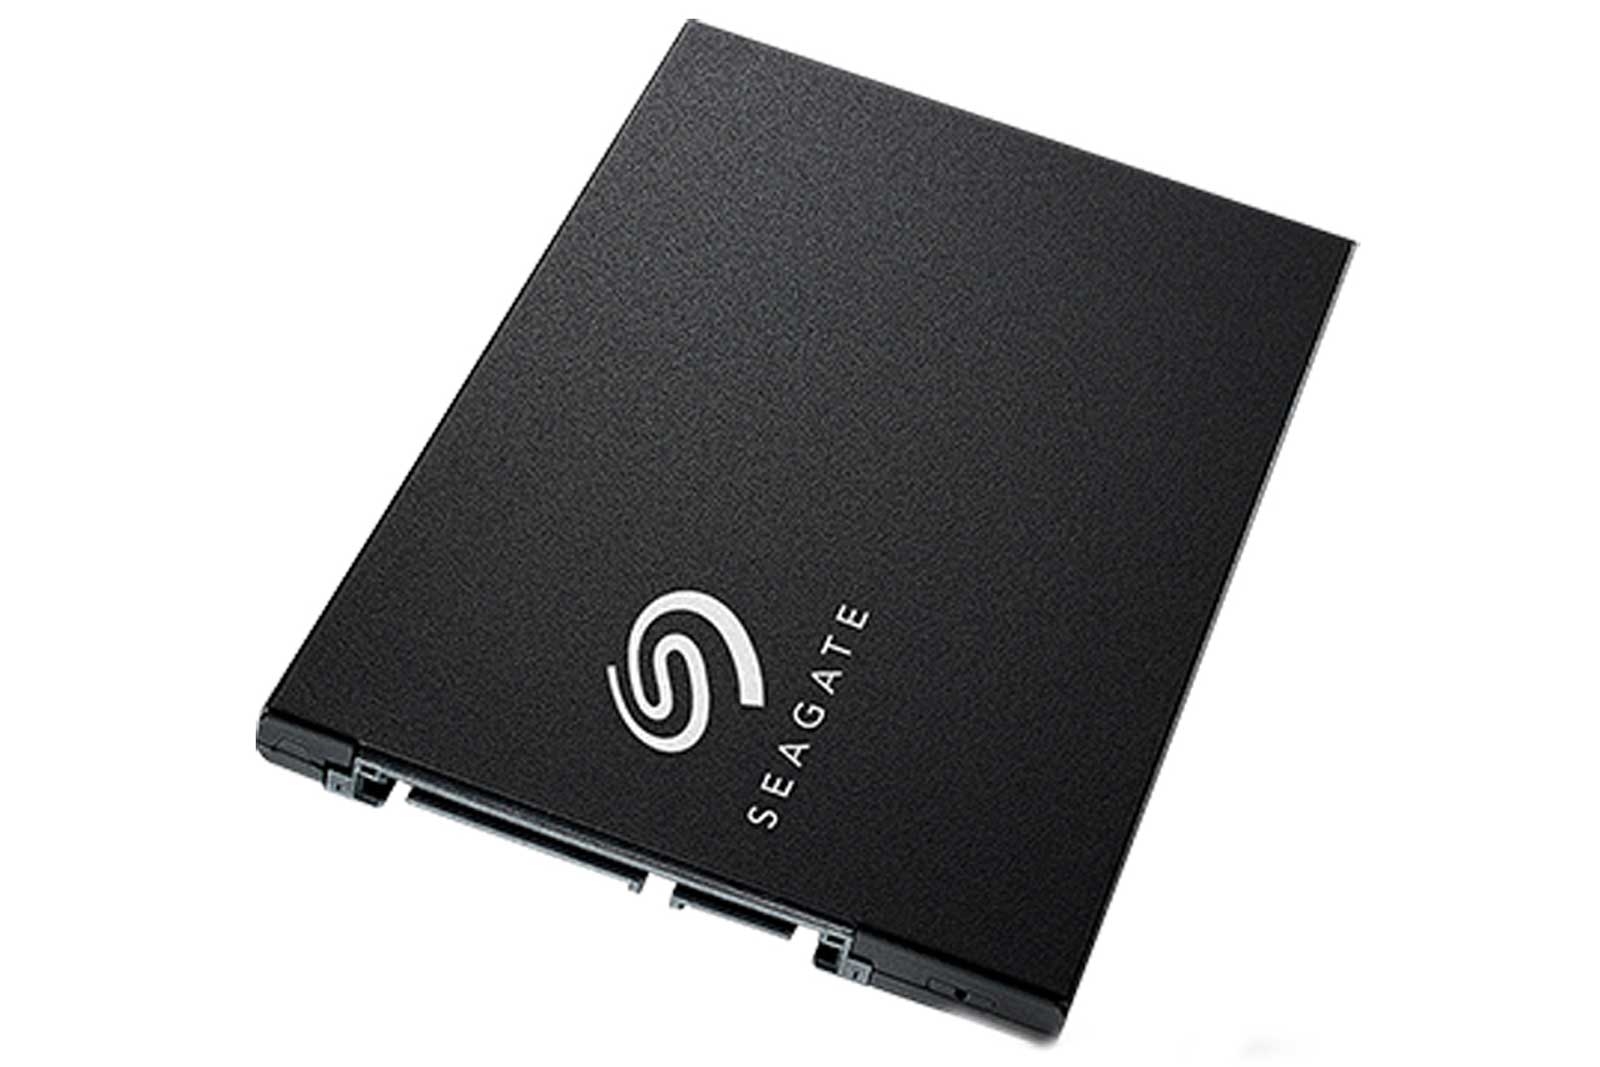 SanDisk Extreme SSDs